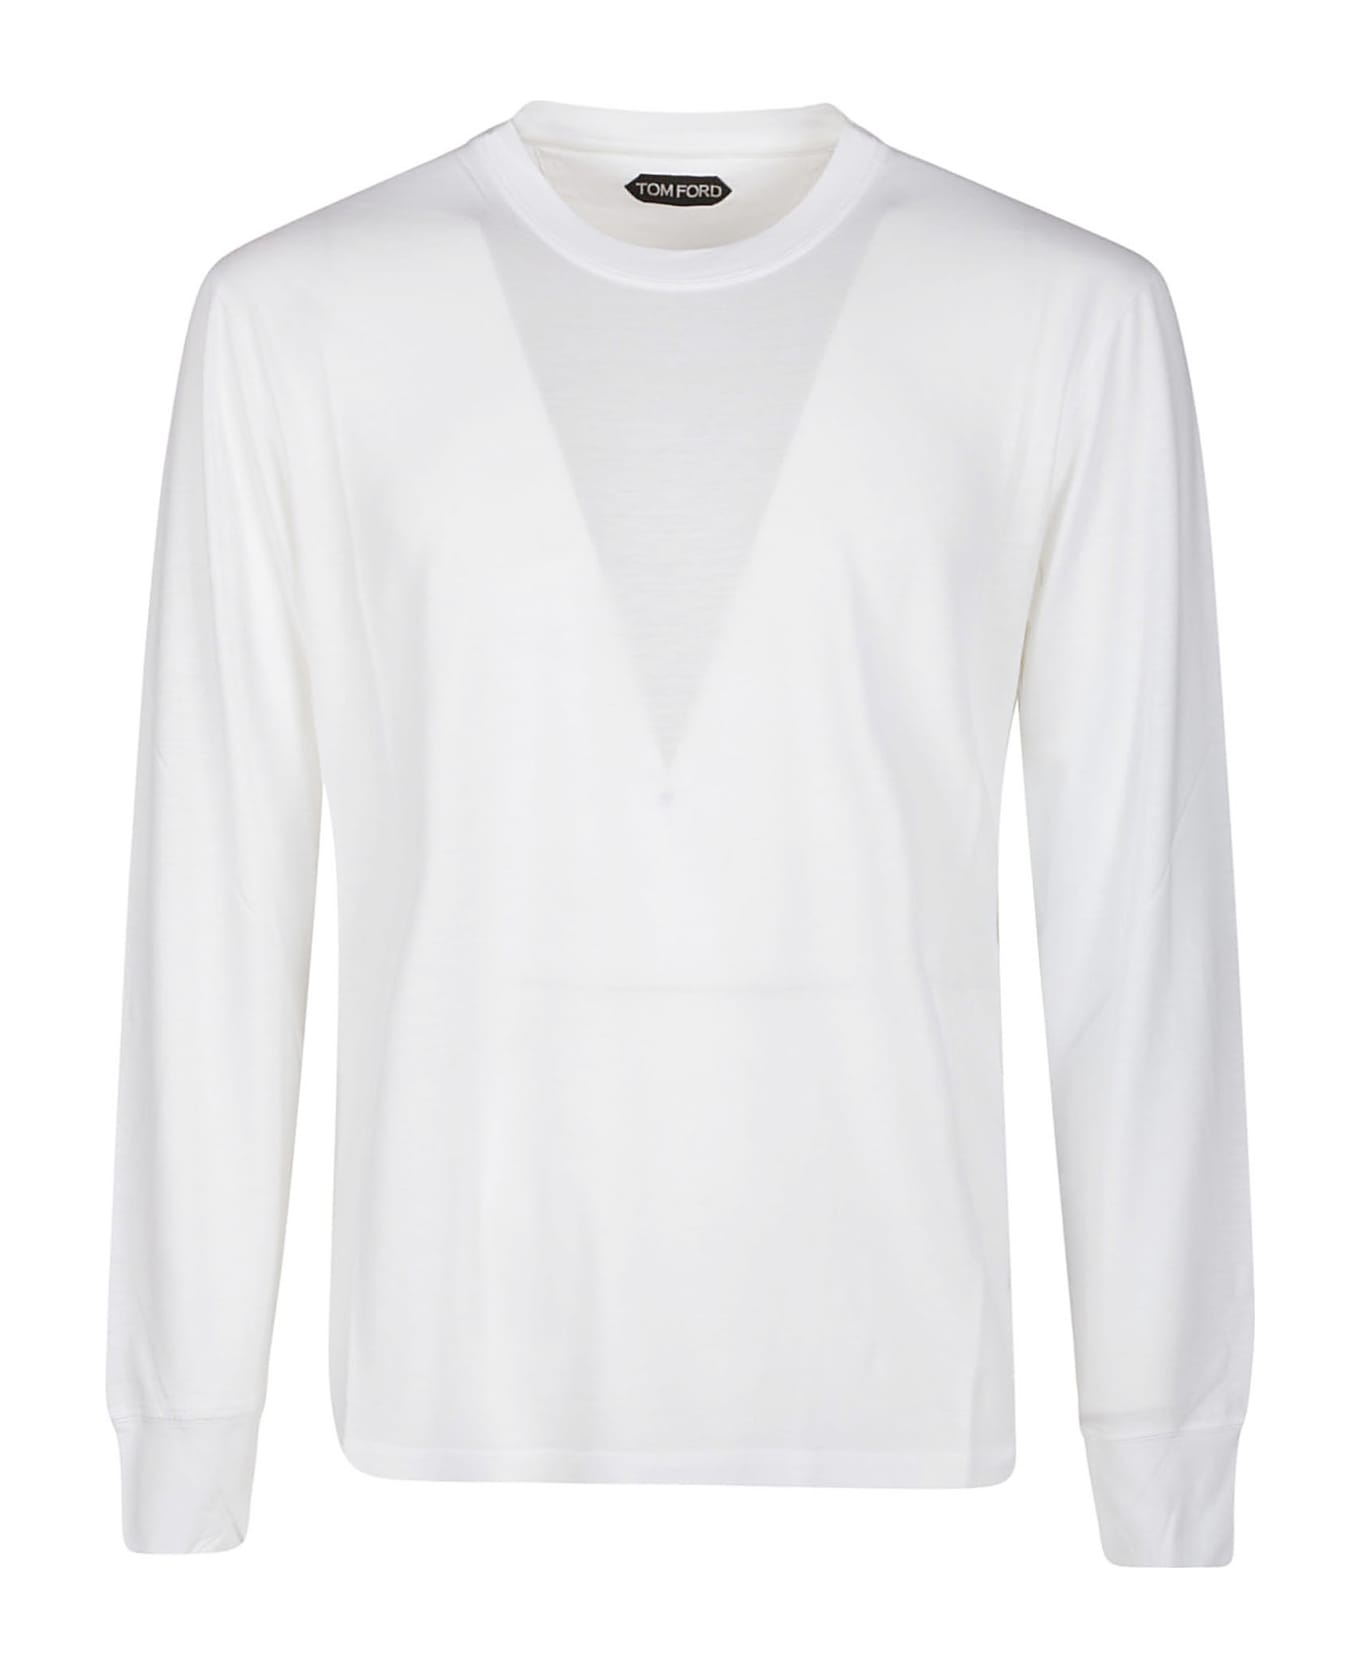 Tom Ford Classic L/s T-shirt - White シャツ